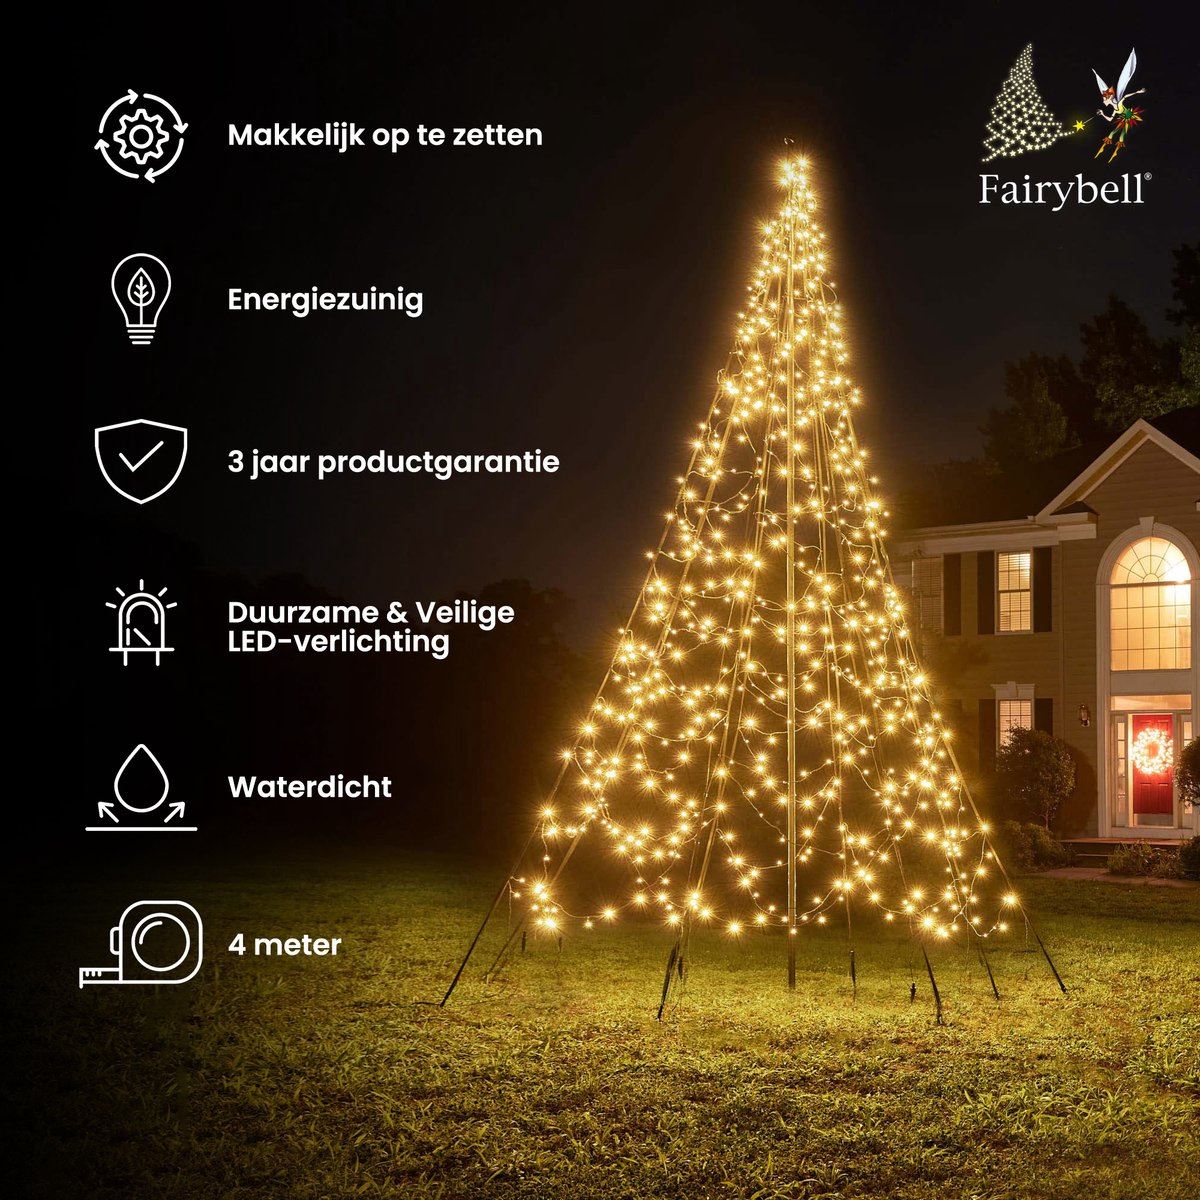 Fairybell vlaggenmast kerstboom - 400 cm - 640 warm witte ledlampjes - inclusief vlaggenmast